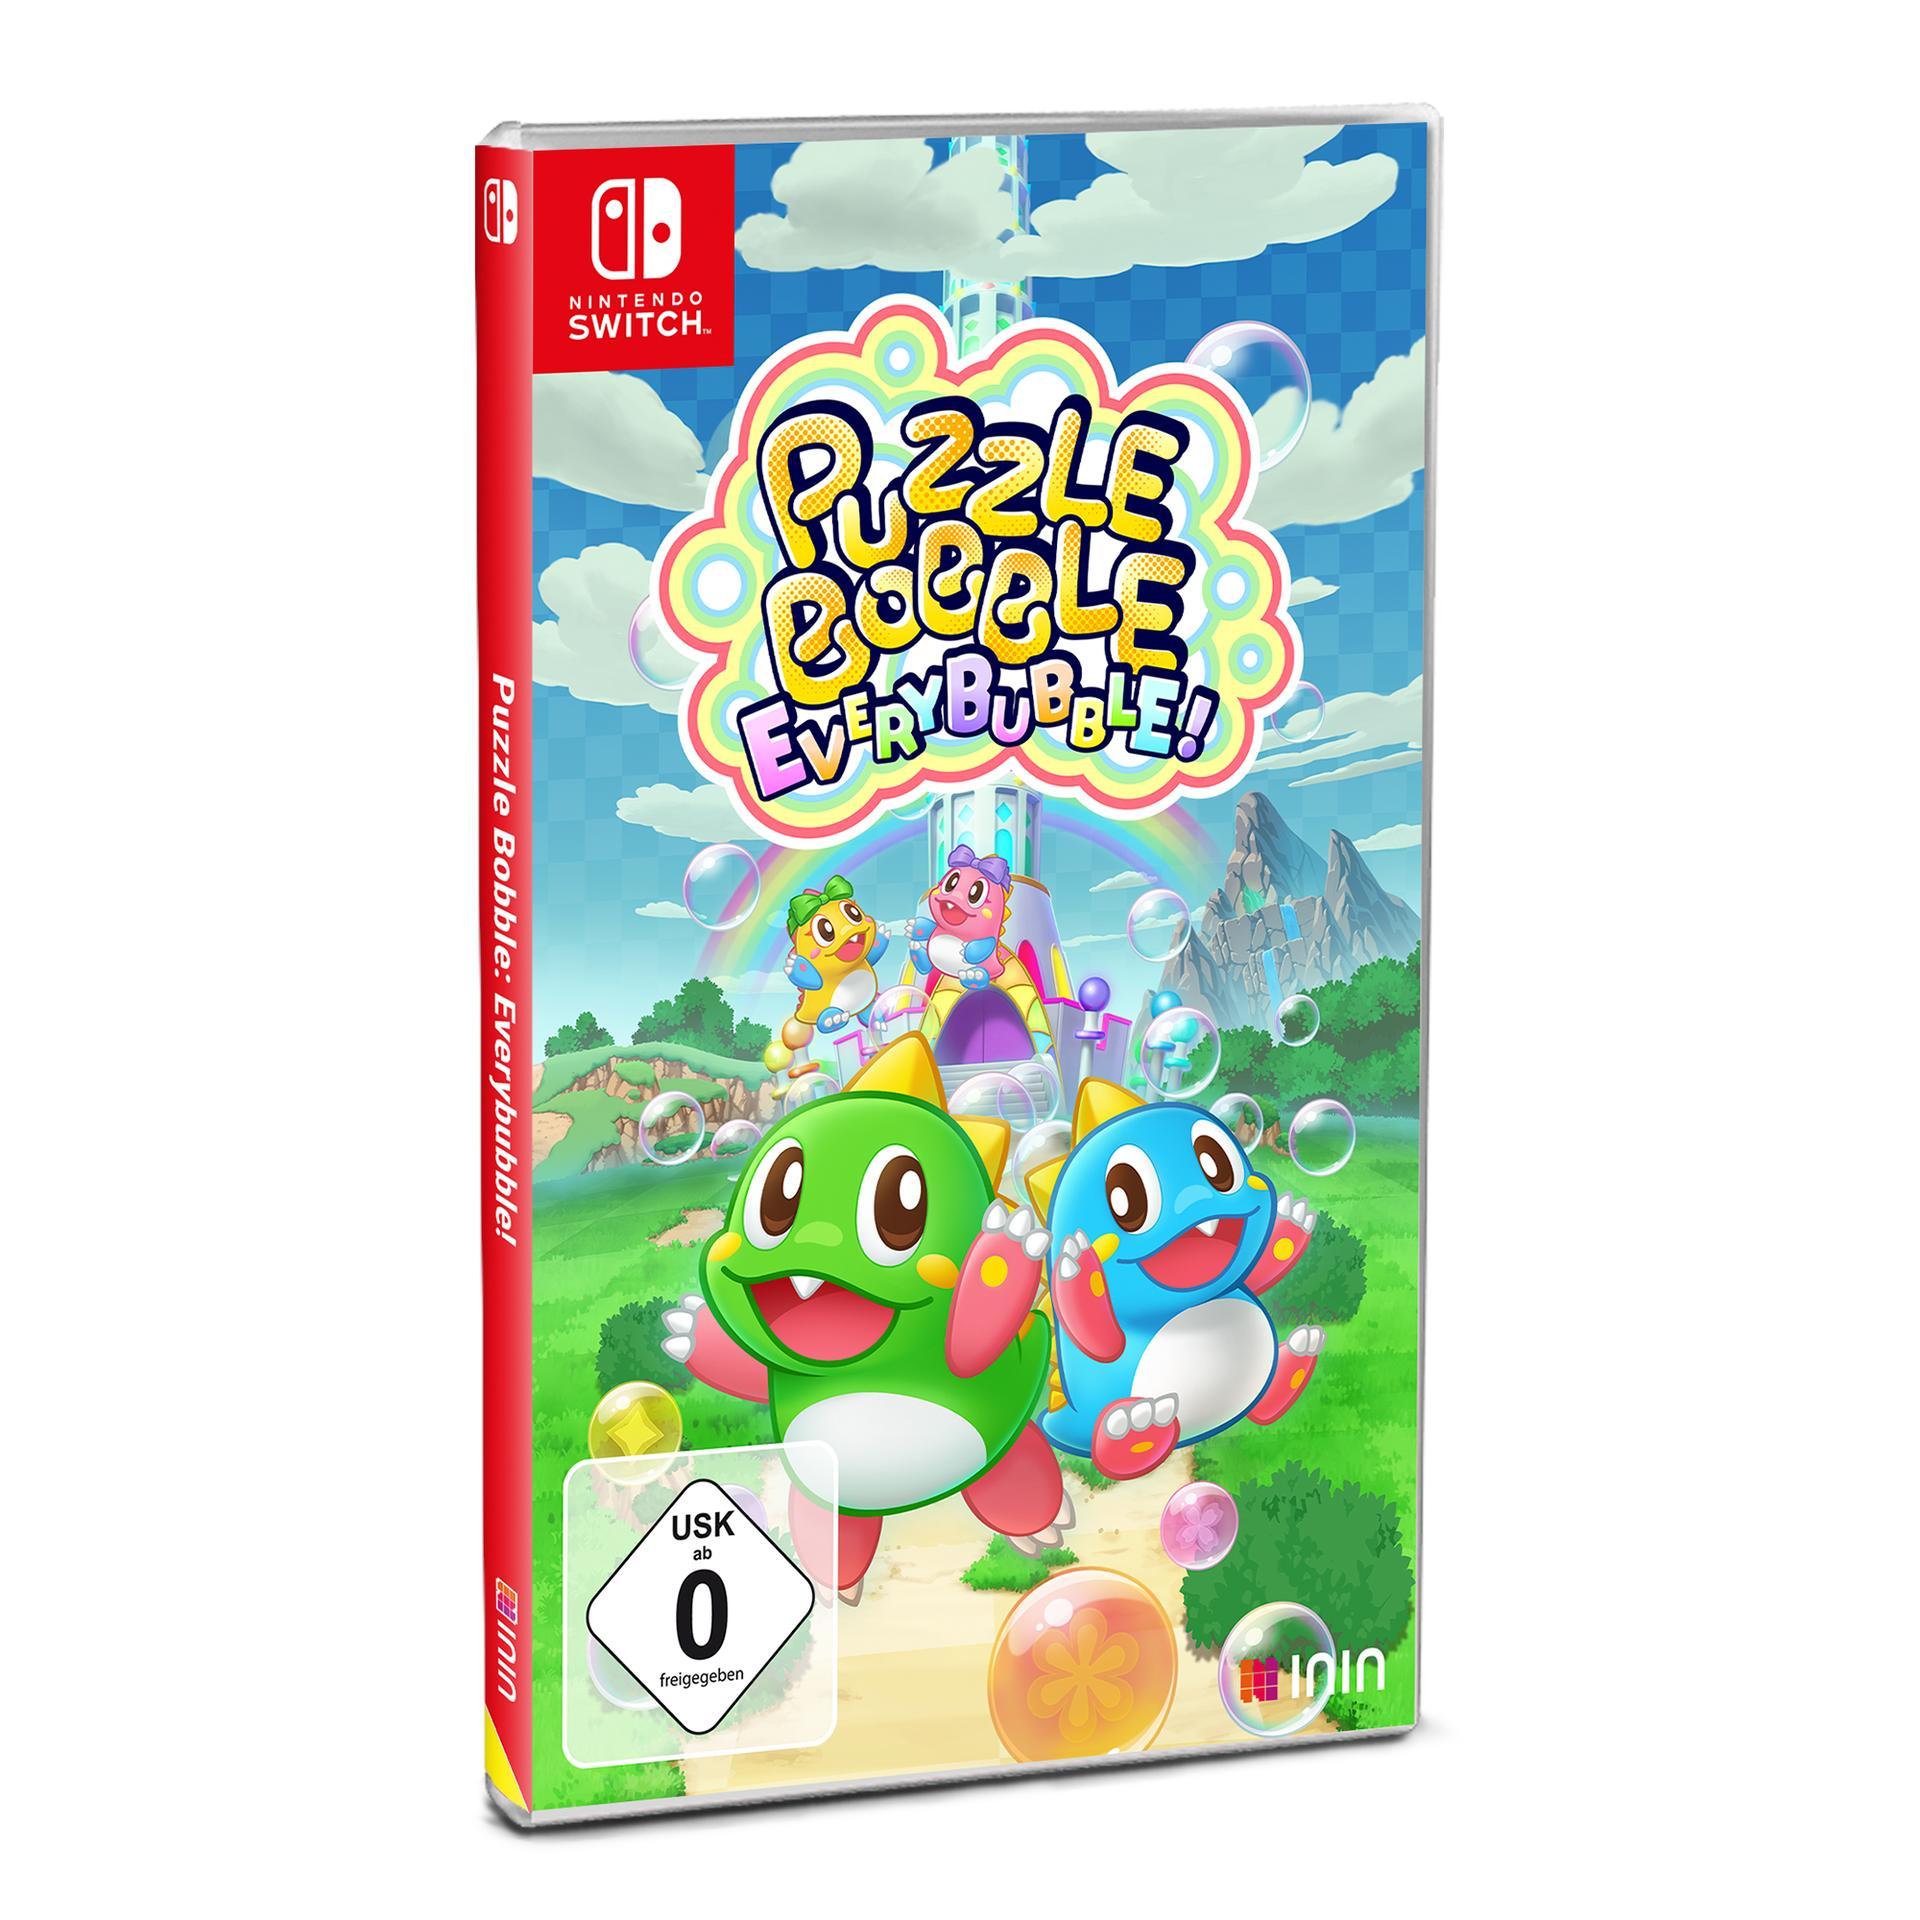 Puzzle Bobble Everybubble! Switch] [Nintendo 